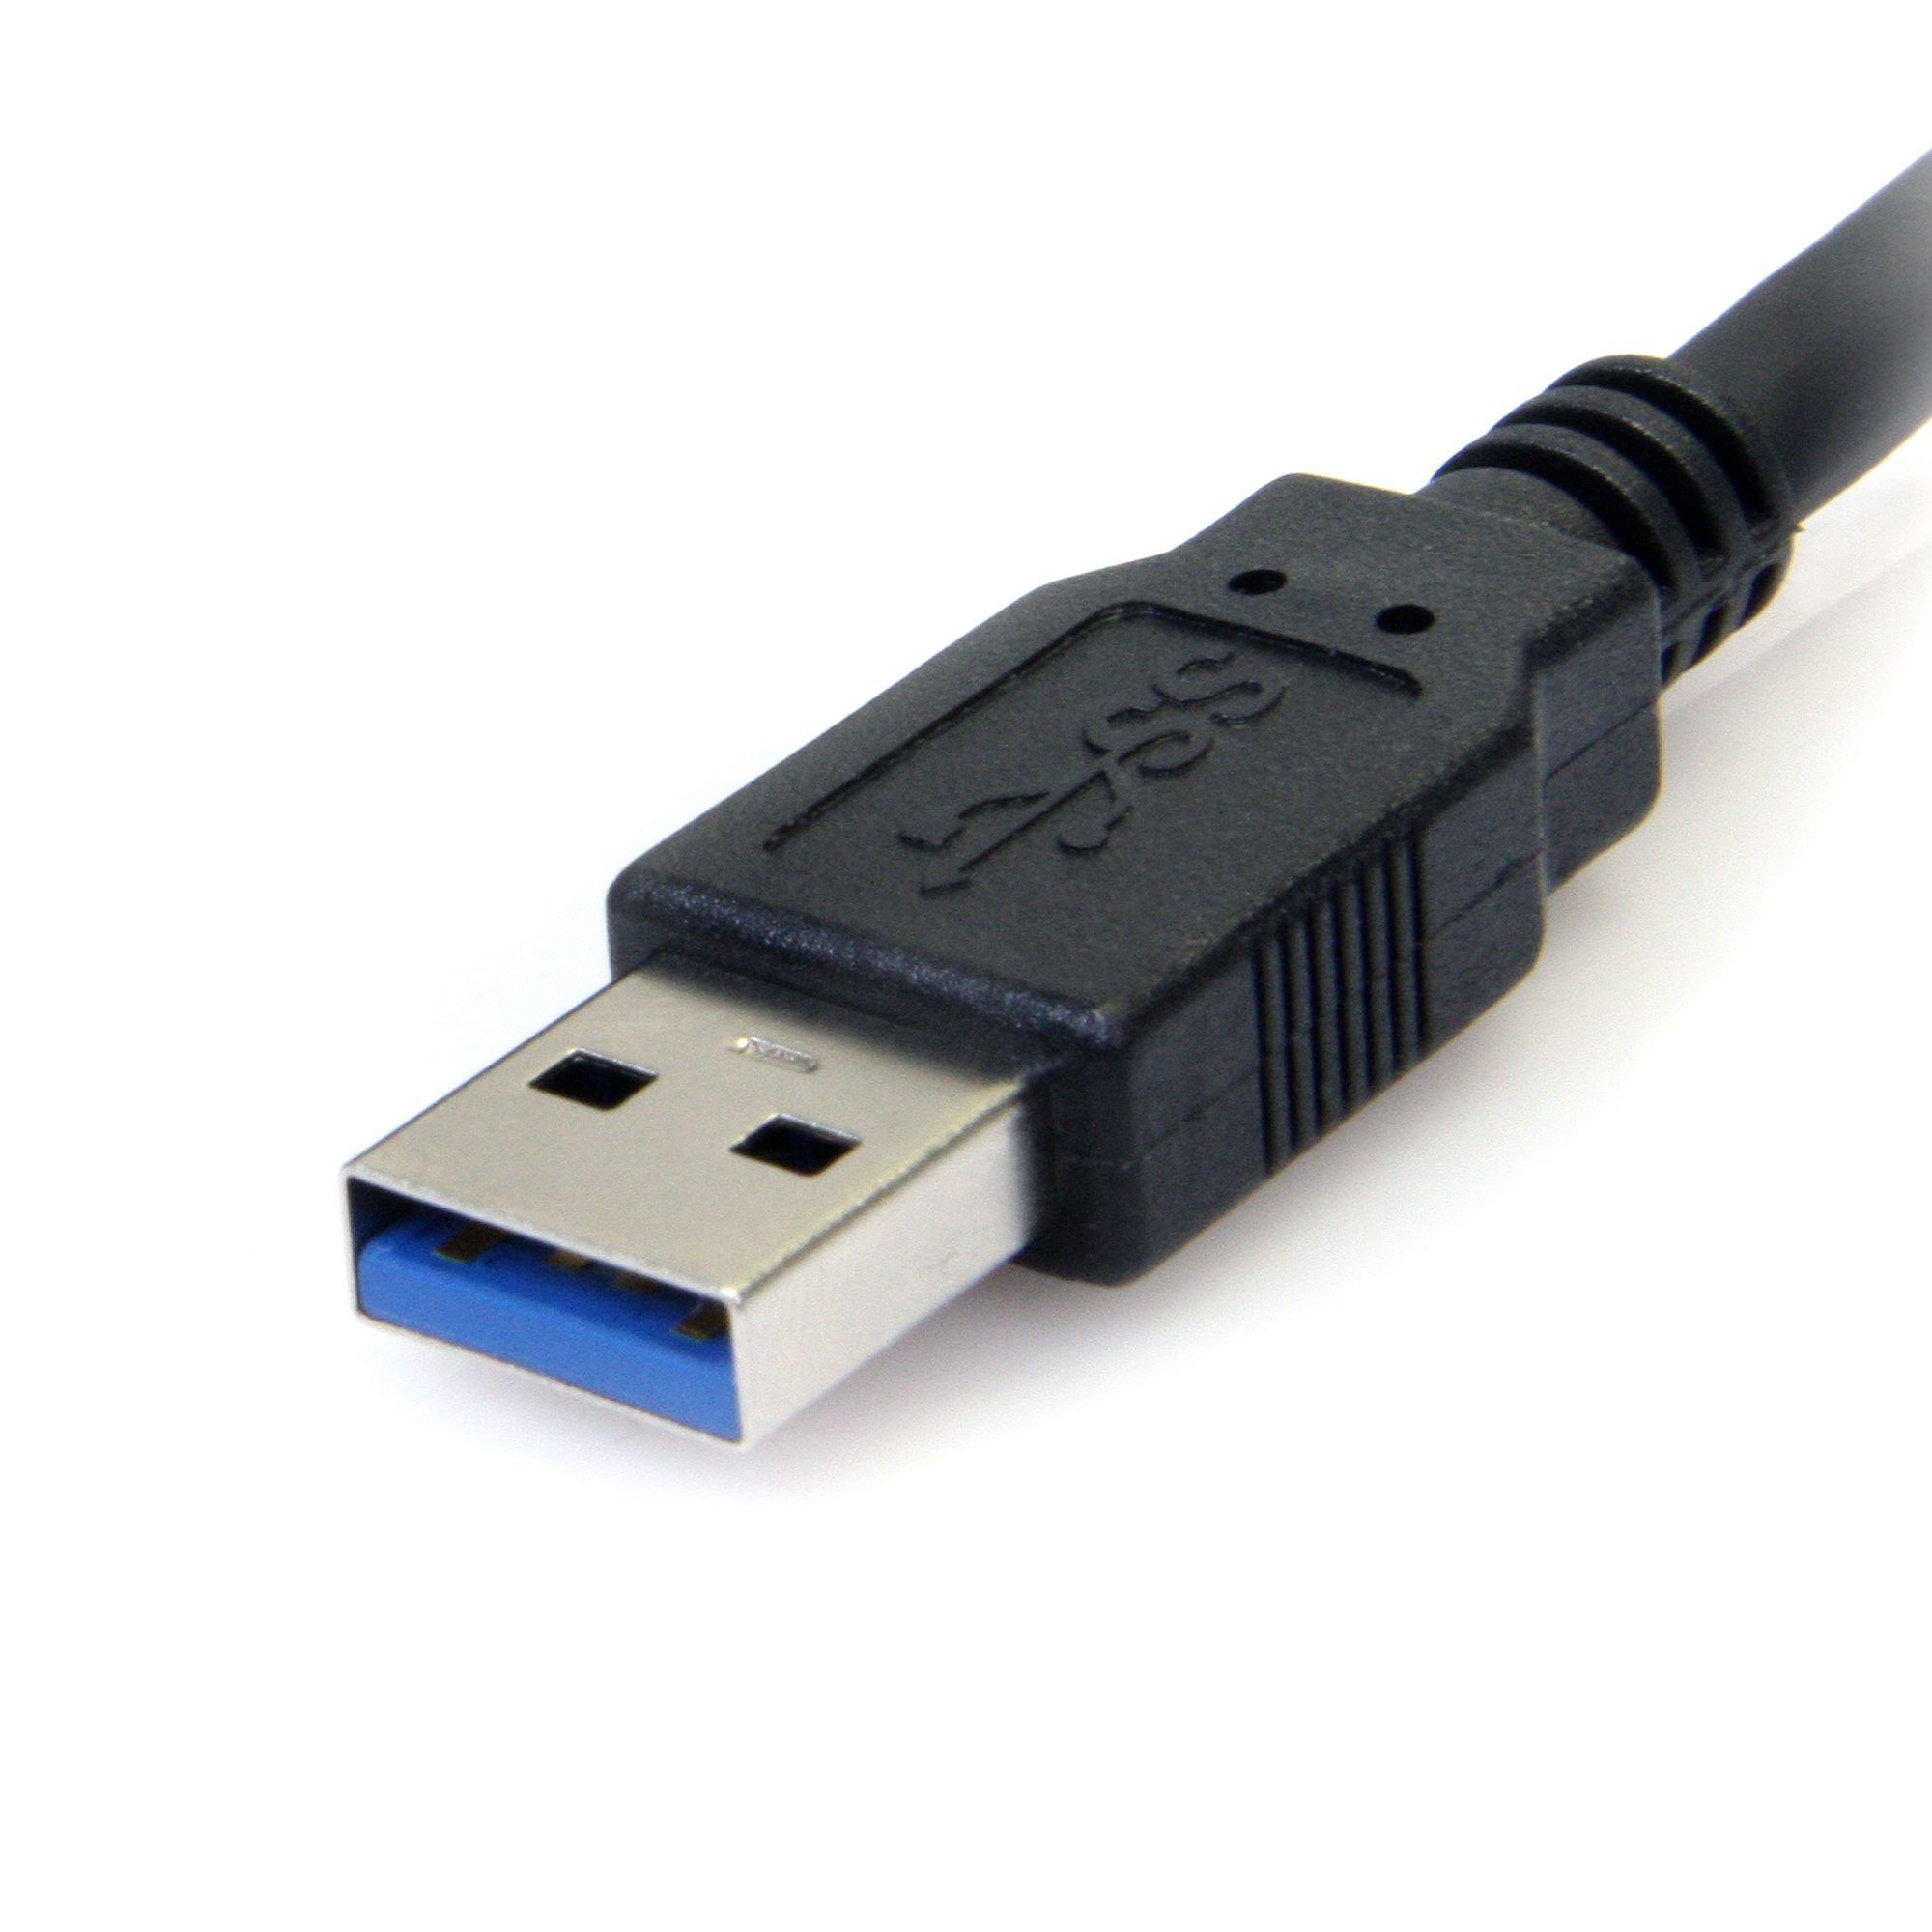 Кабель USB 3.0 SUPERSPEED USB 3.0. USB 3.0 Type b(m) угловой. USB 3.0 Cable Micro-b винт. Кабель USB 3.0 Micro USB 90 градусов.